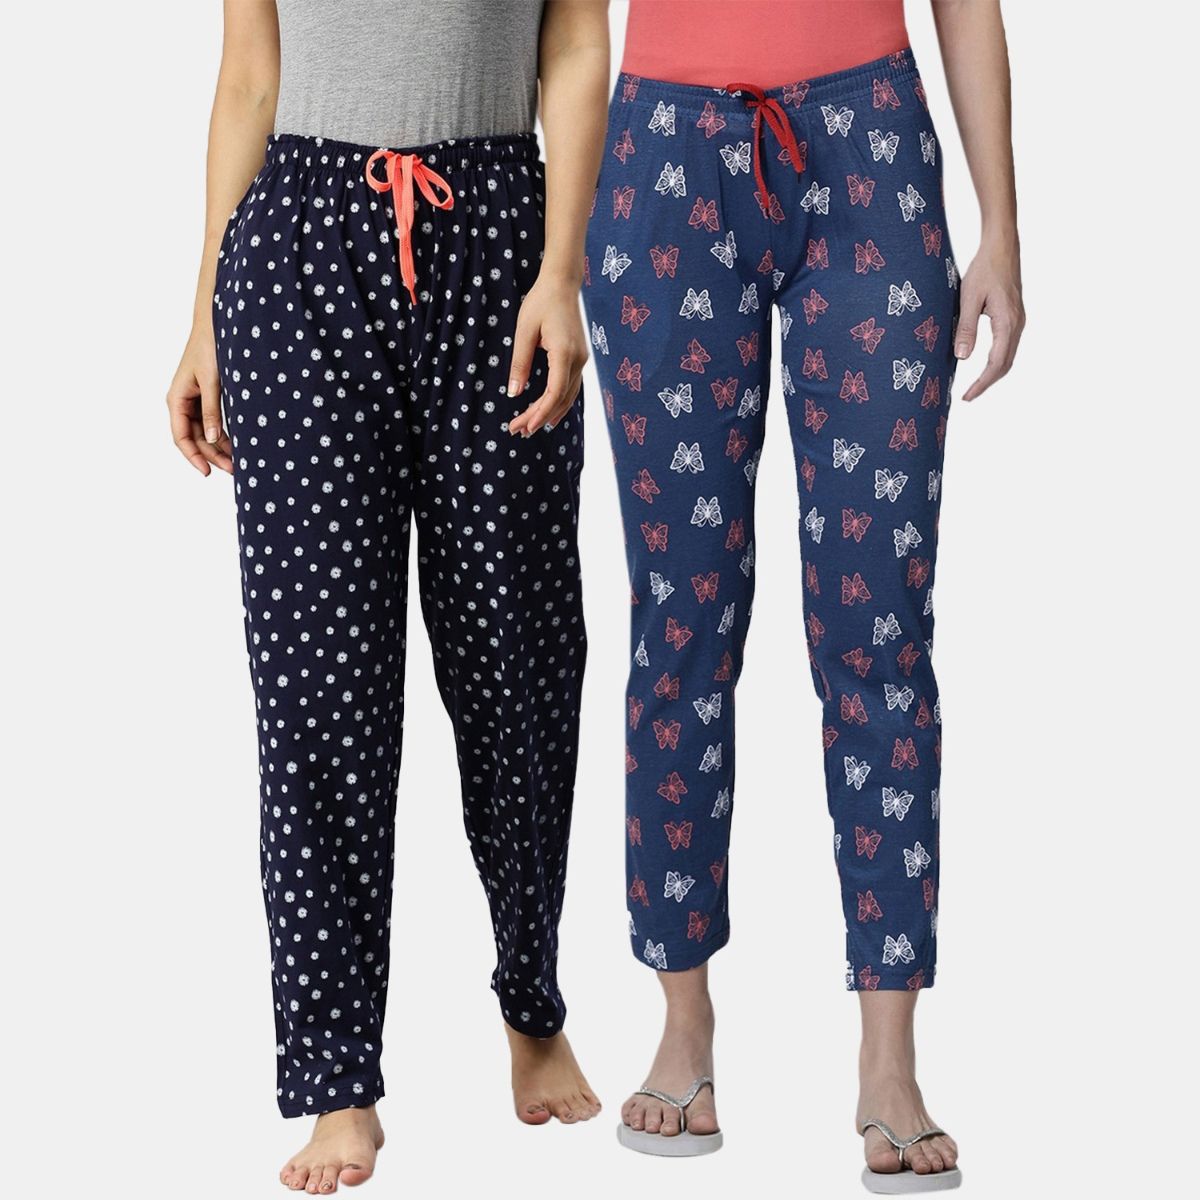 Van Heusen Intimates Pyjama, Printed Cotton Pyjama with Pockets for Women  at Vanheusenintimates.com